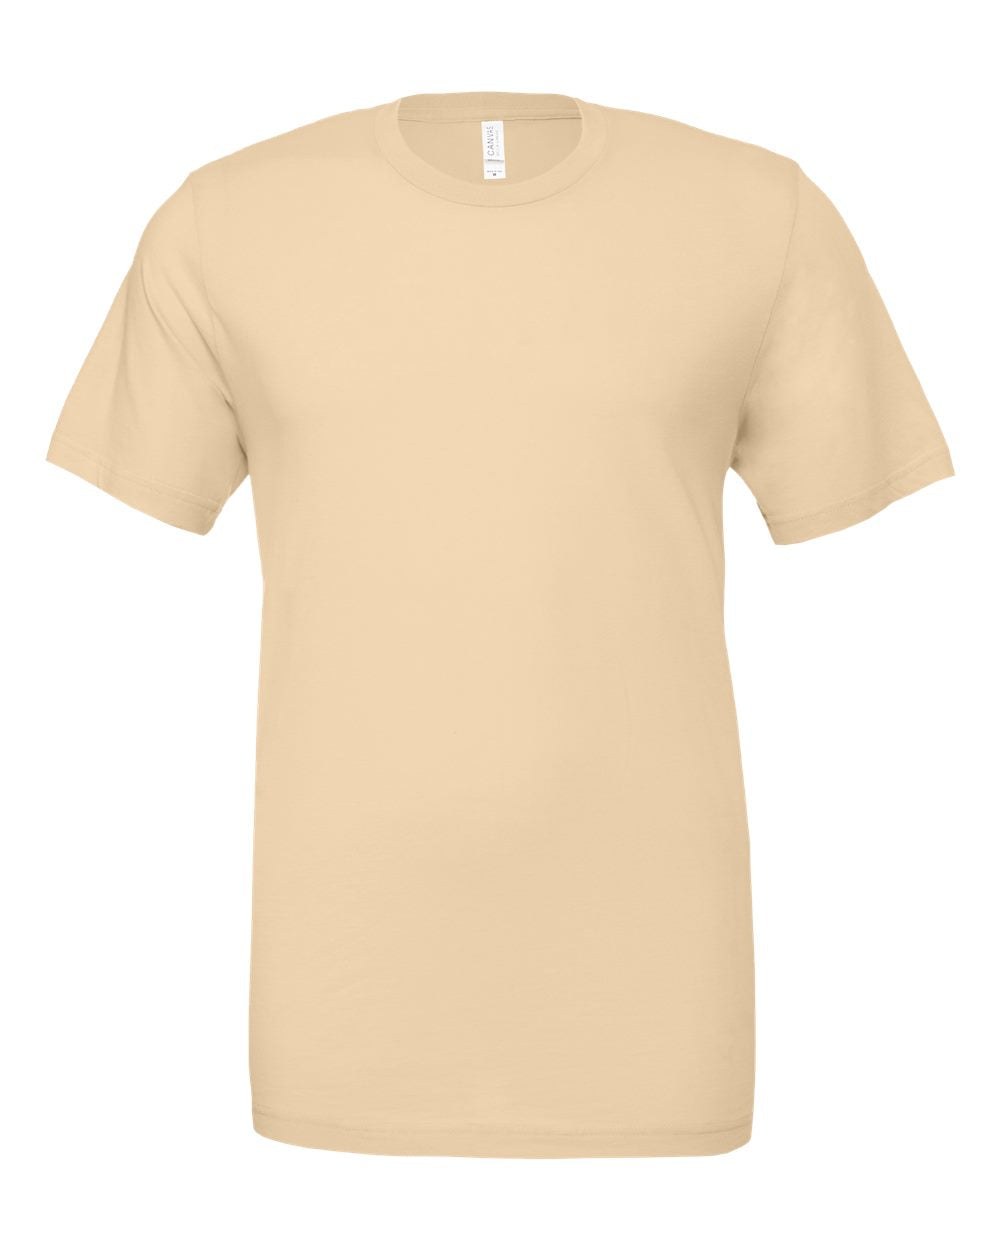 BELLA + CANVAS - Unisex Jersey Tee shirts